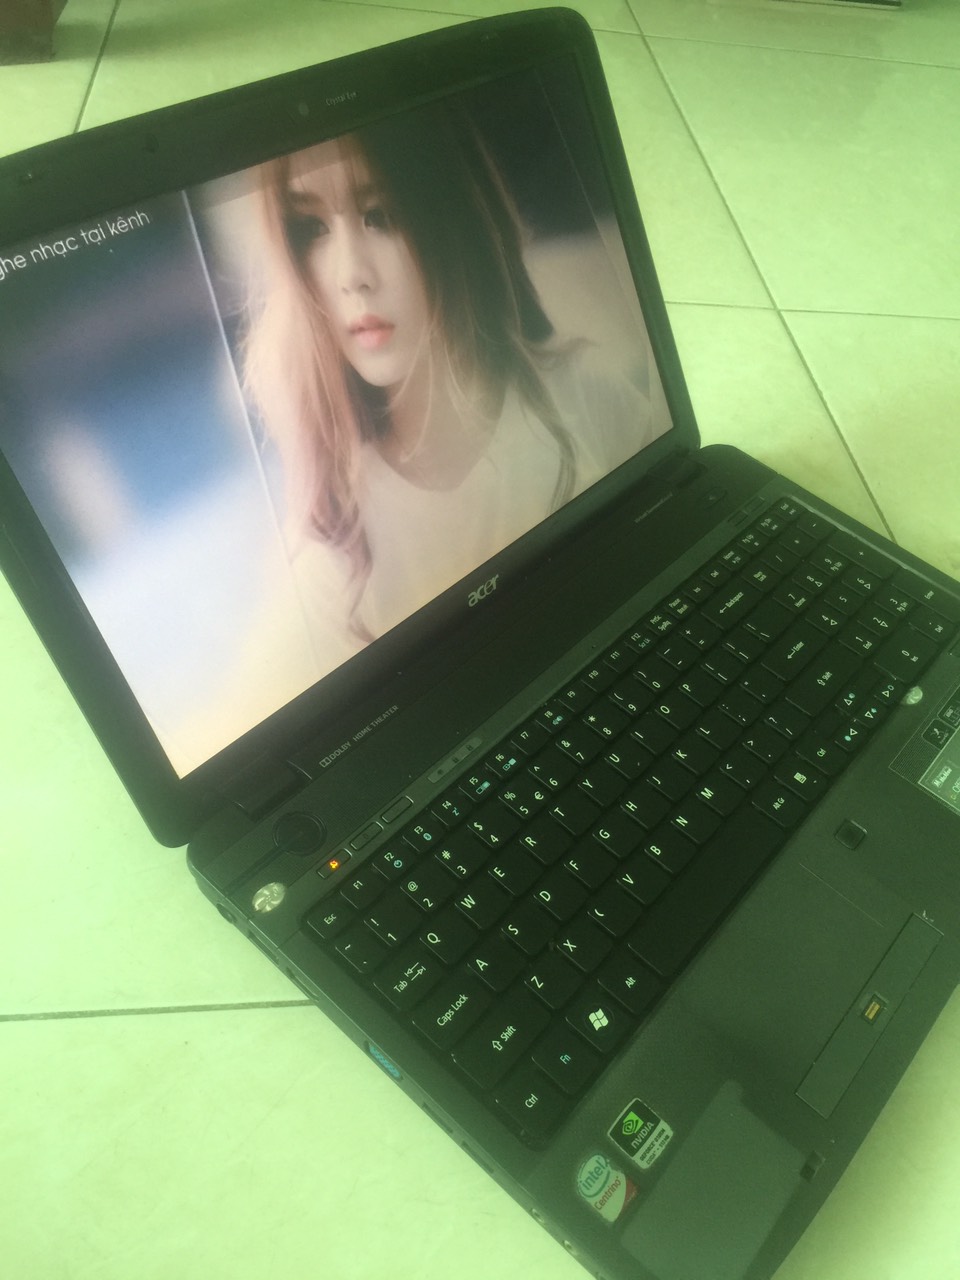 Laptop ACER 5738